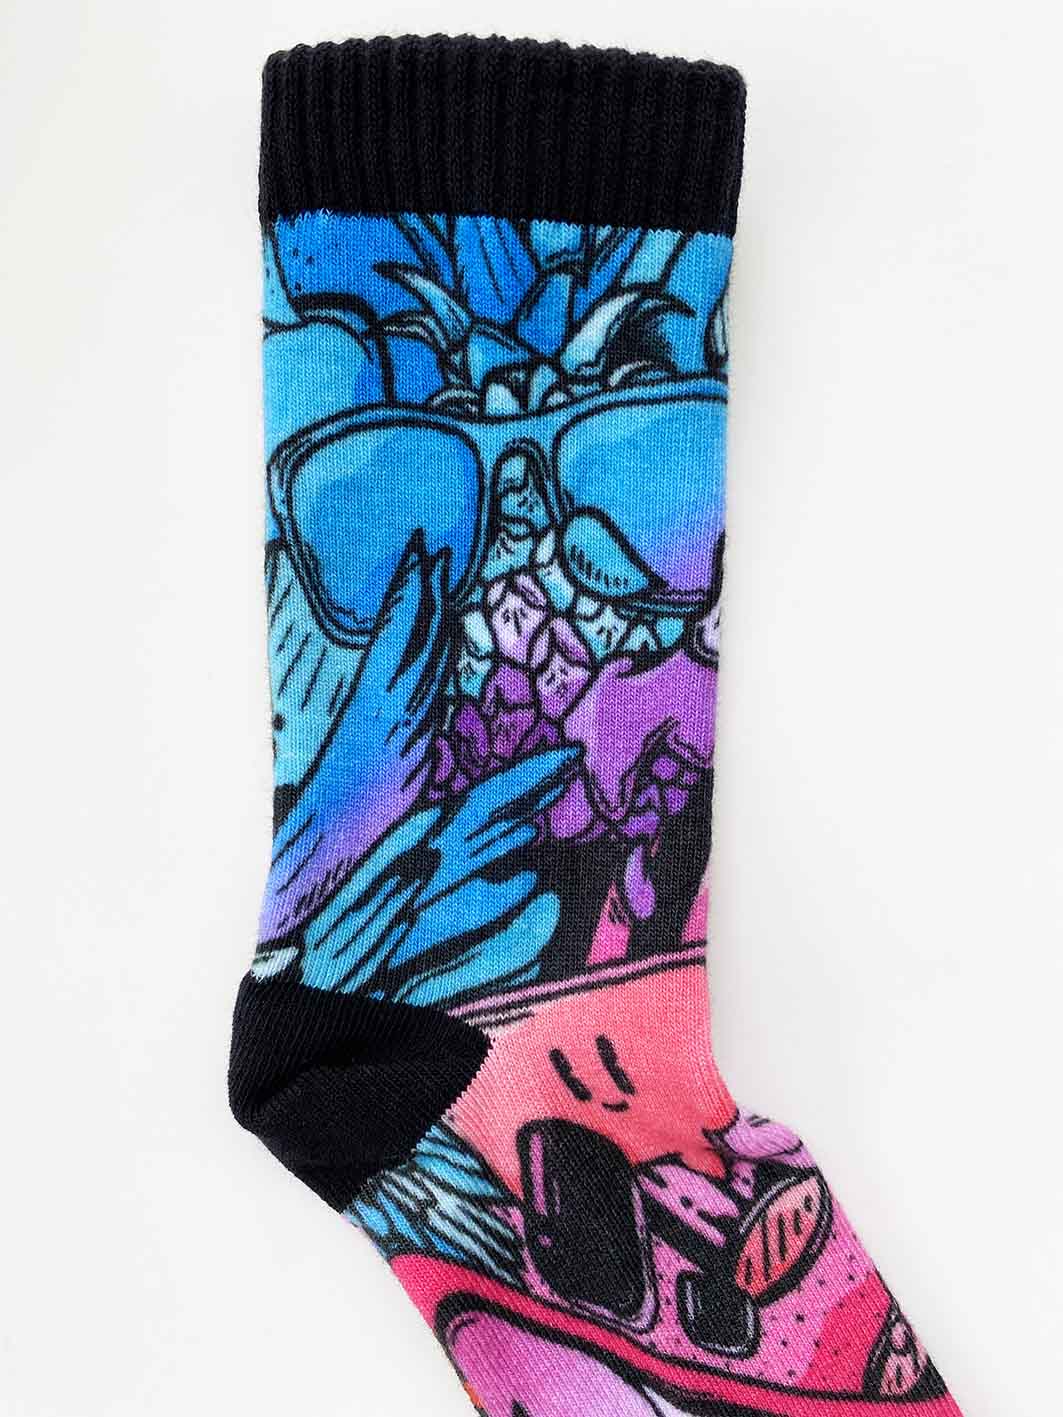 Jared Hochstrasser "Summer Vibes" Printed Sock